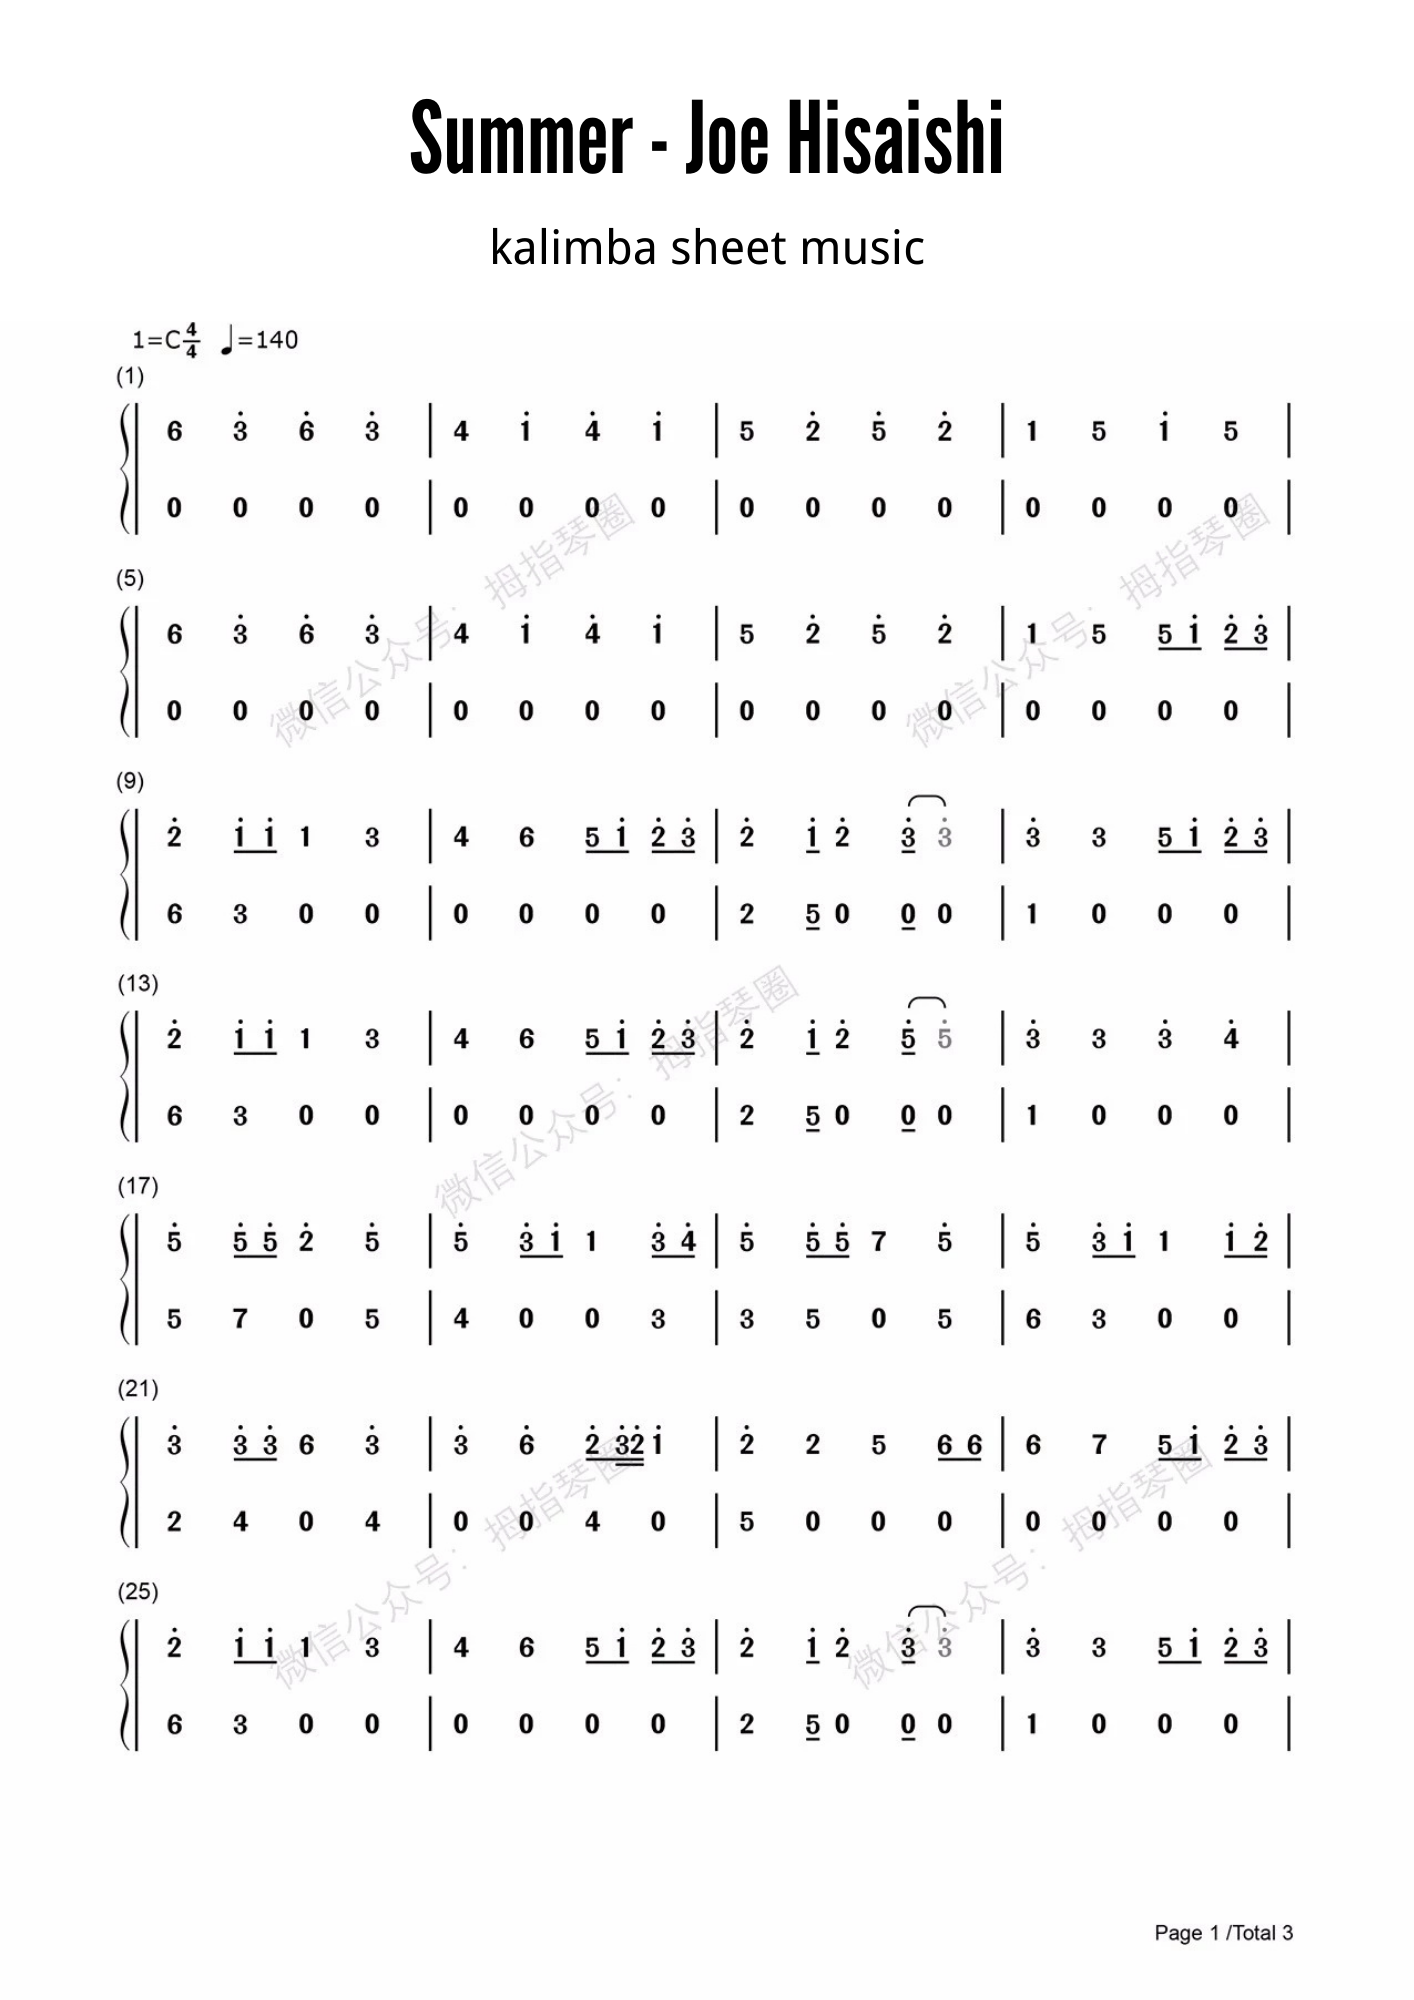 kalimba sheet music for beginners